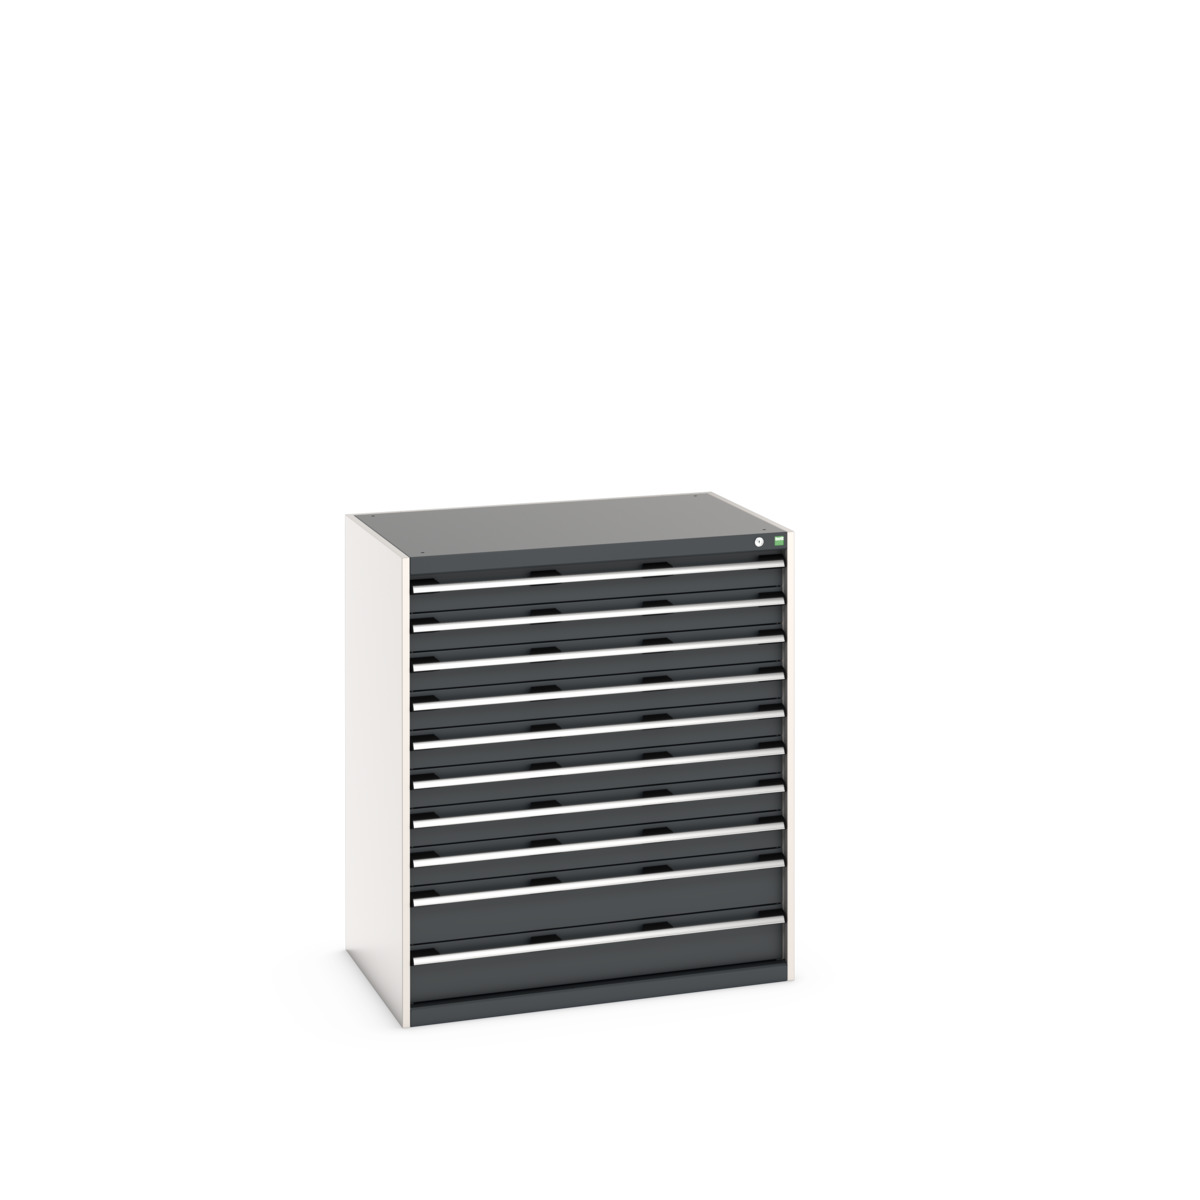 40029033. - cubio drawer cabinet